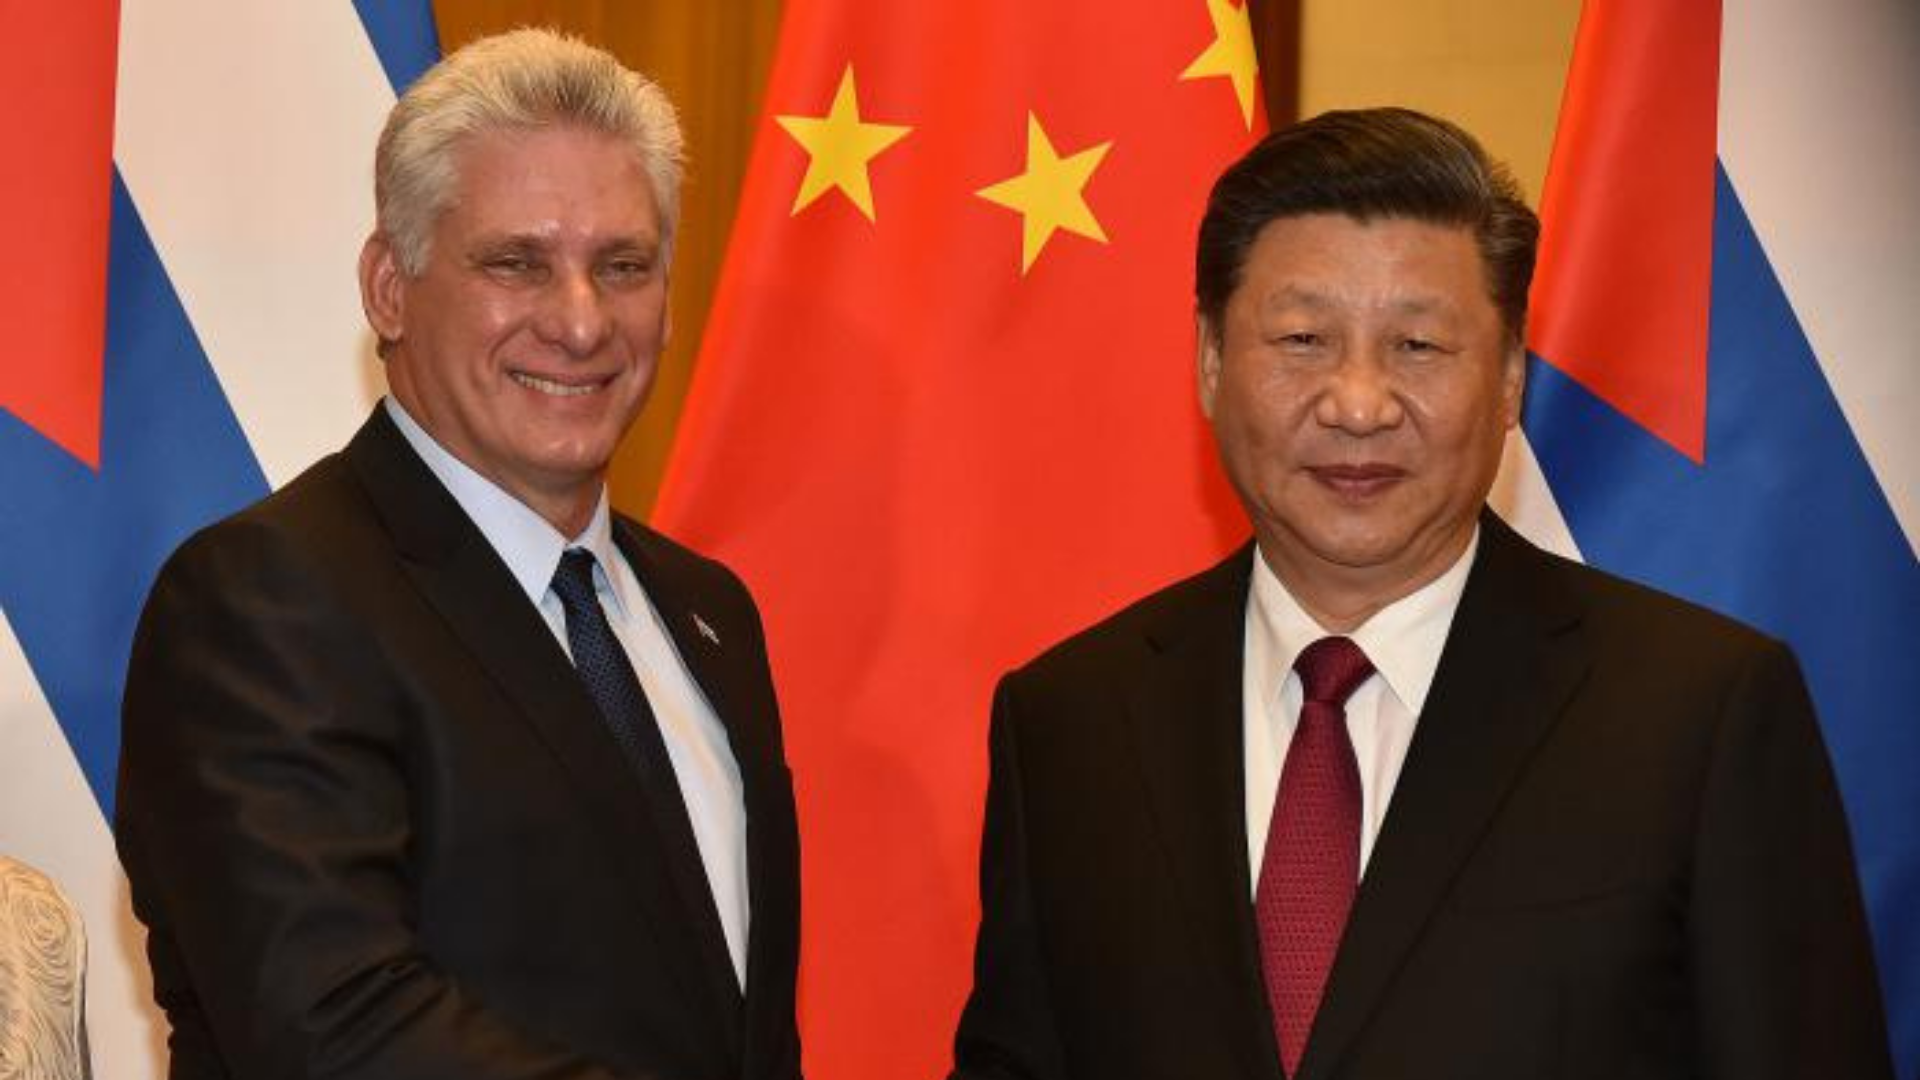 Díaz-Canel y su homólogo chino Xi Jinping